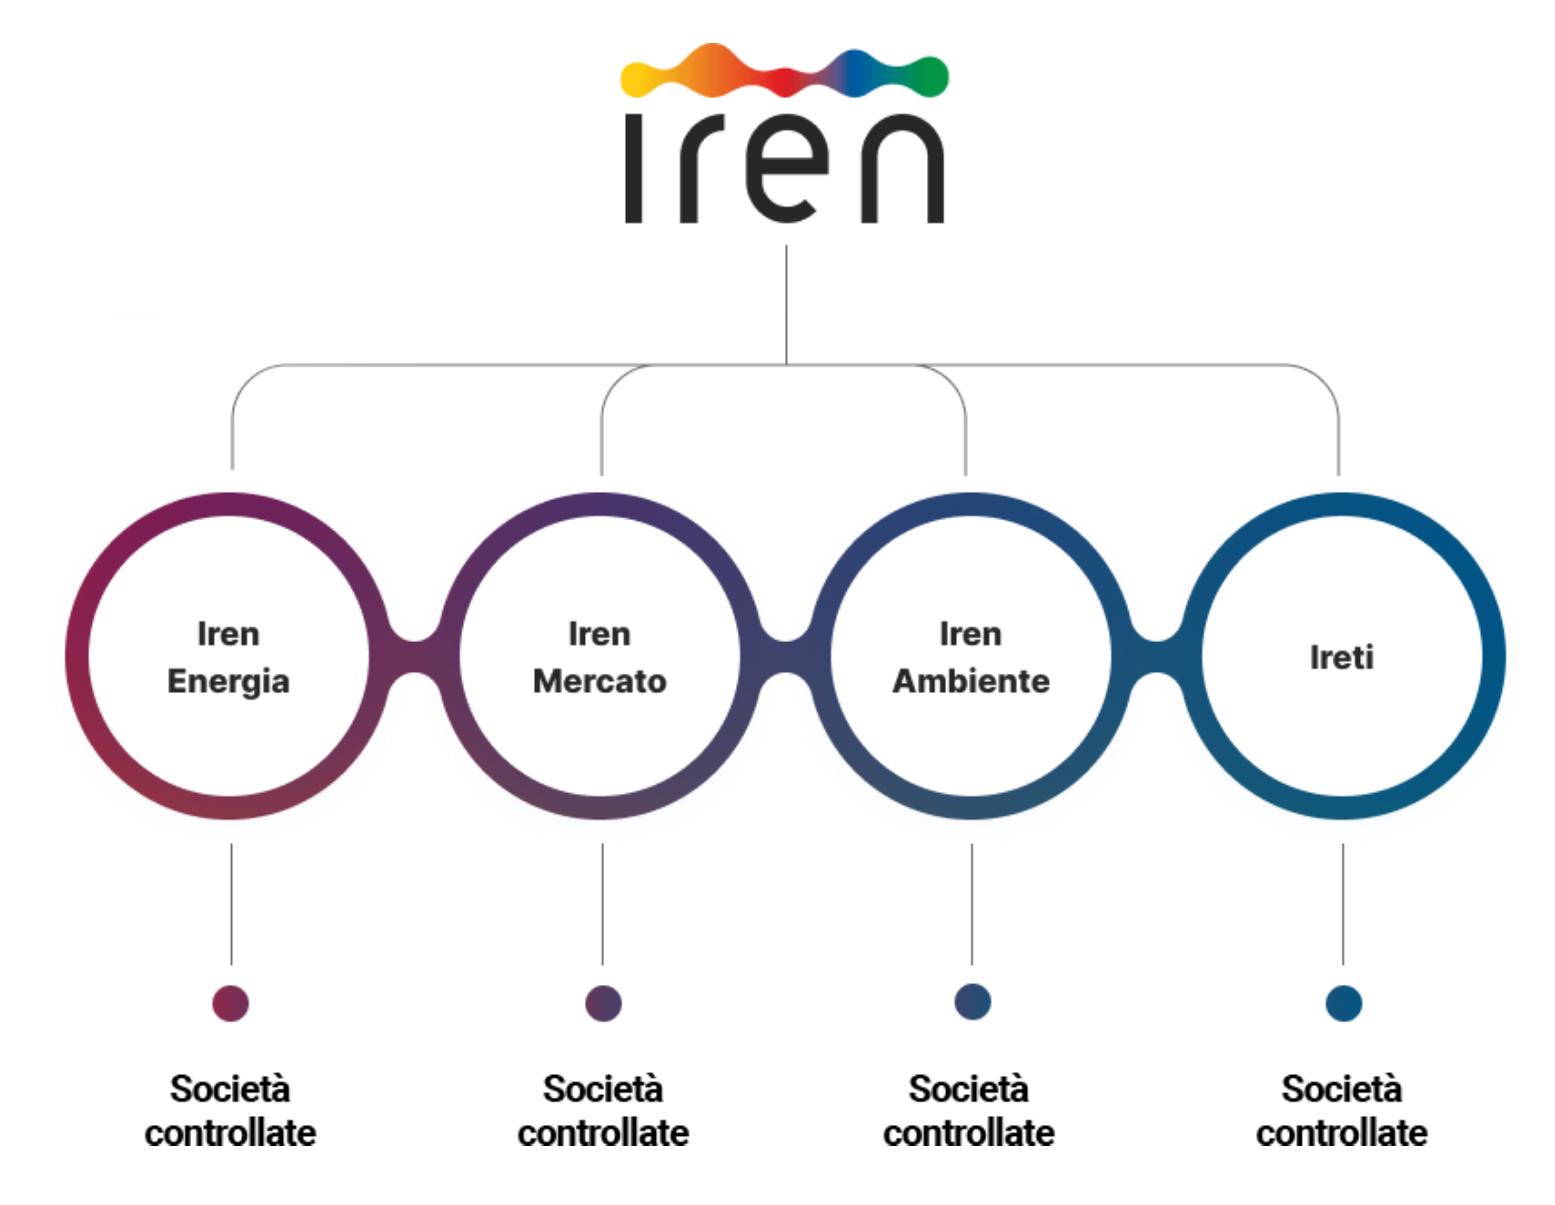 Grafico della struttura Iren delle BU: Iren Energia, Iren Mercato, Iren Ambiente, Ireti